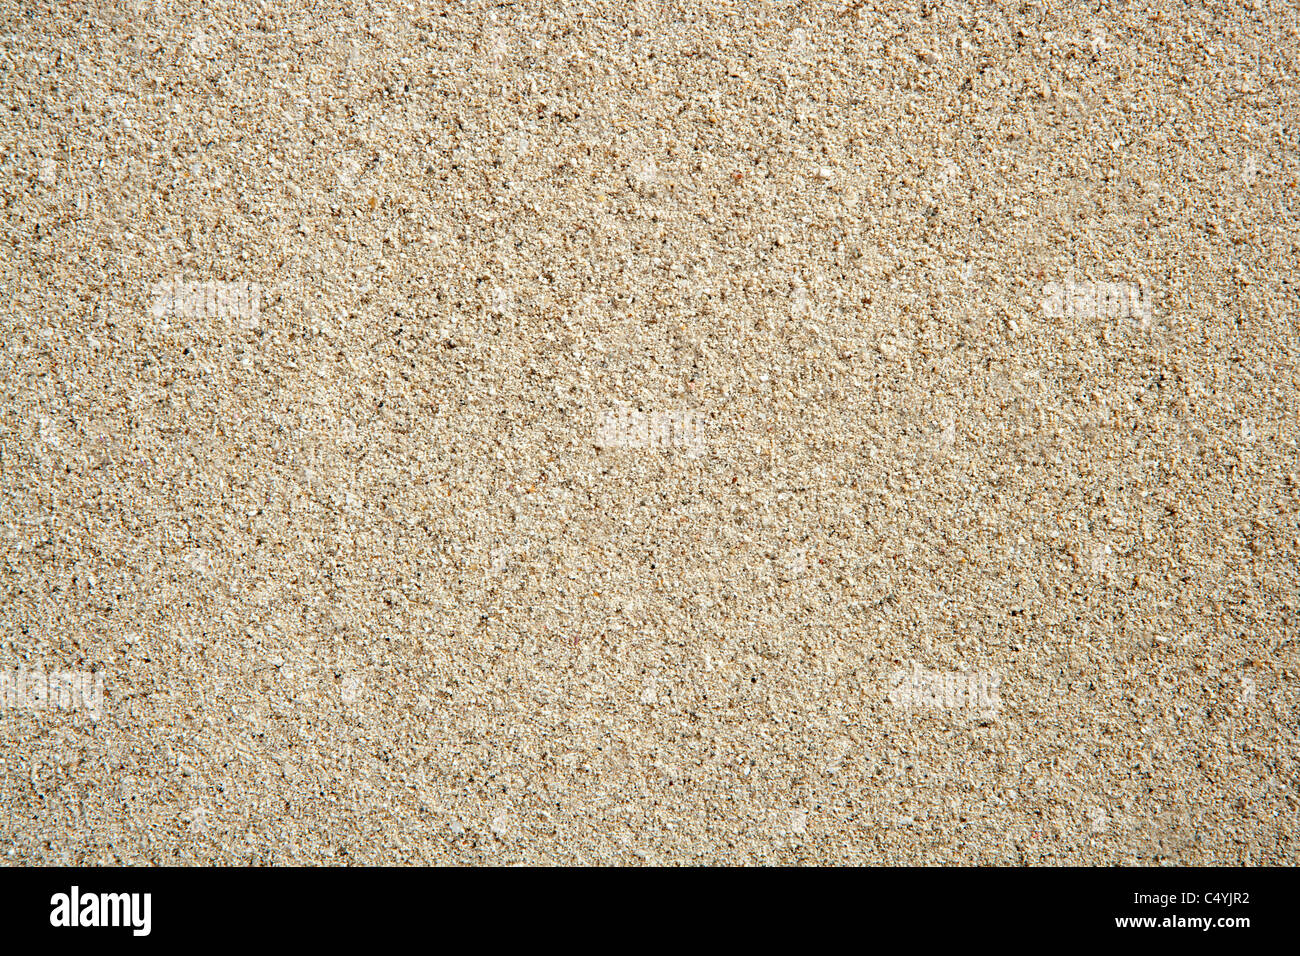 beach sand perfect plain texture background pattern Stock Photo - Alamy